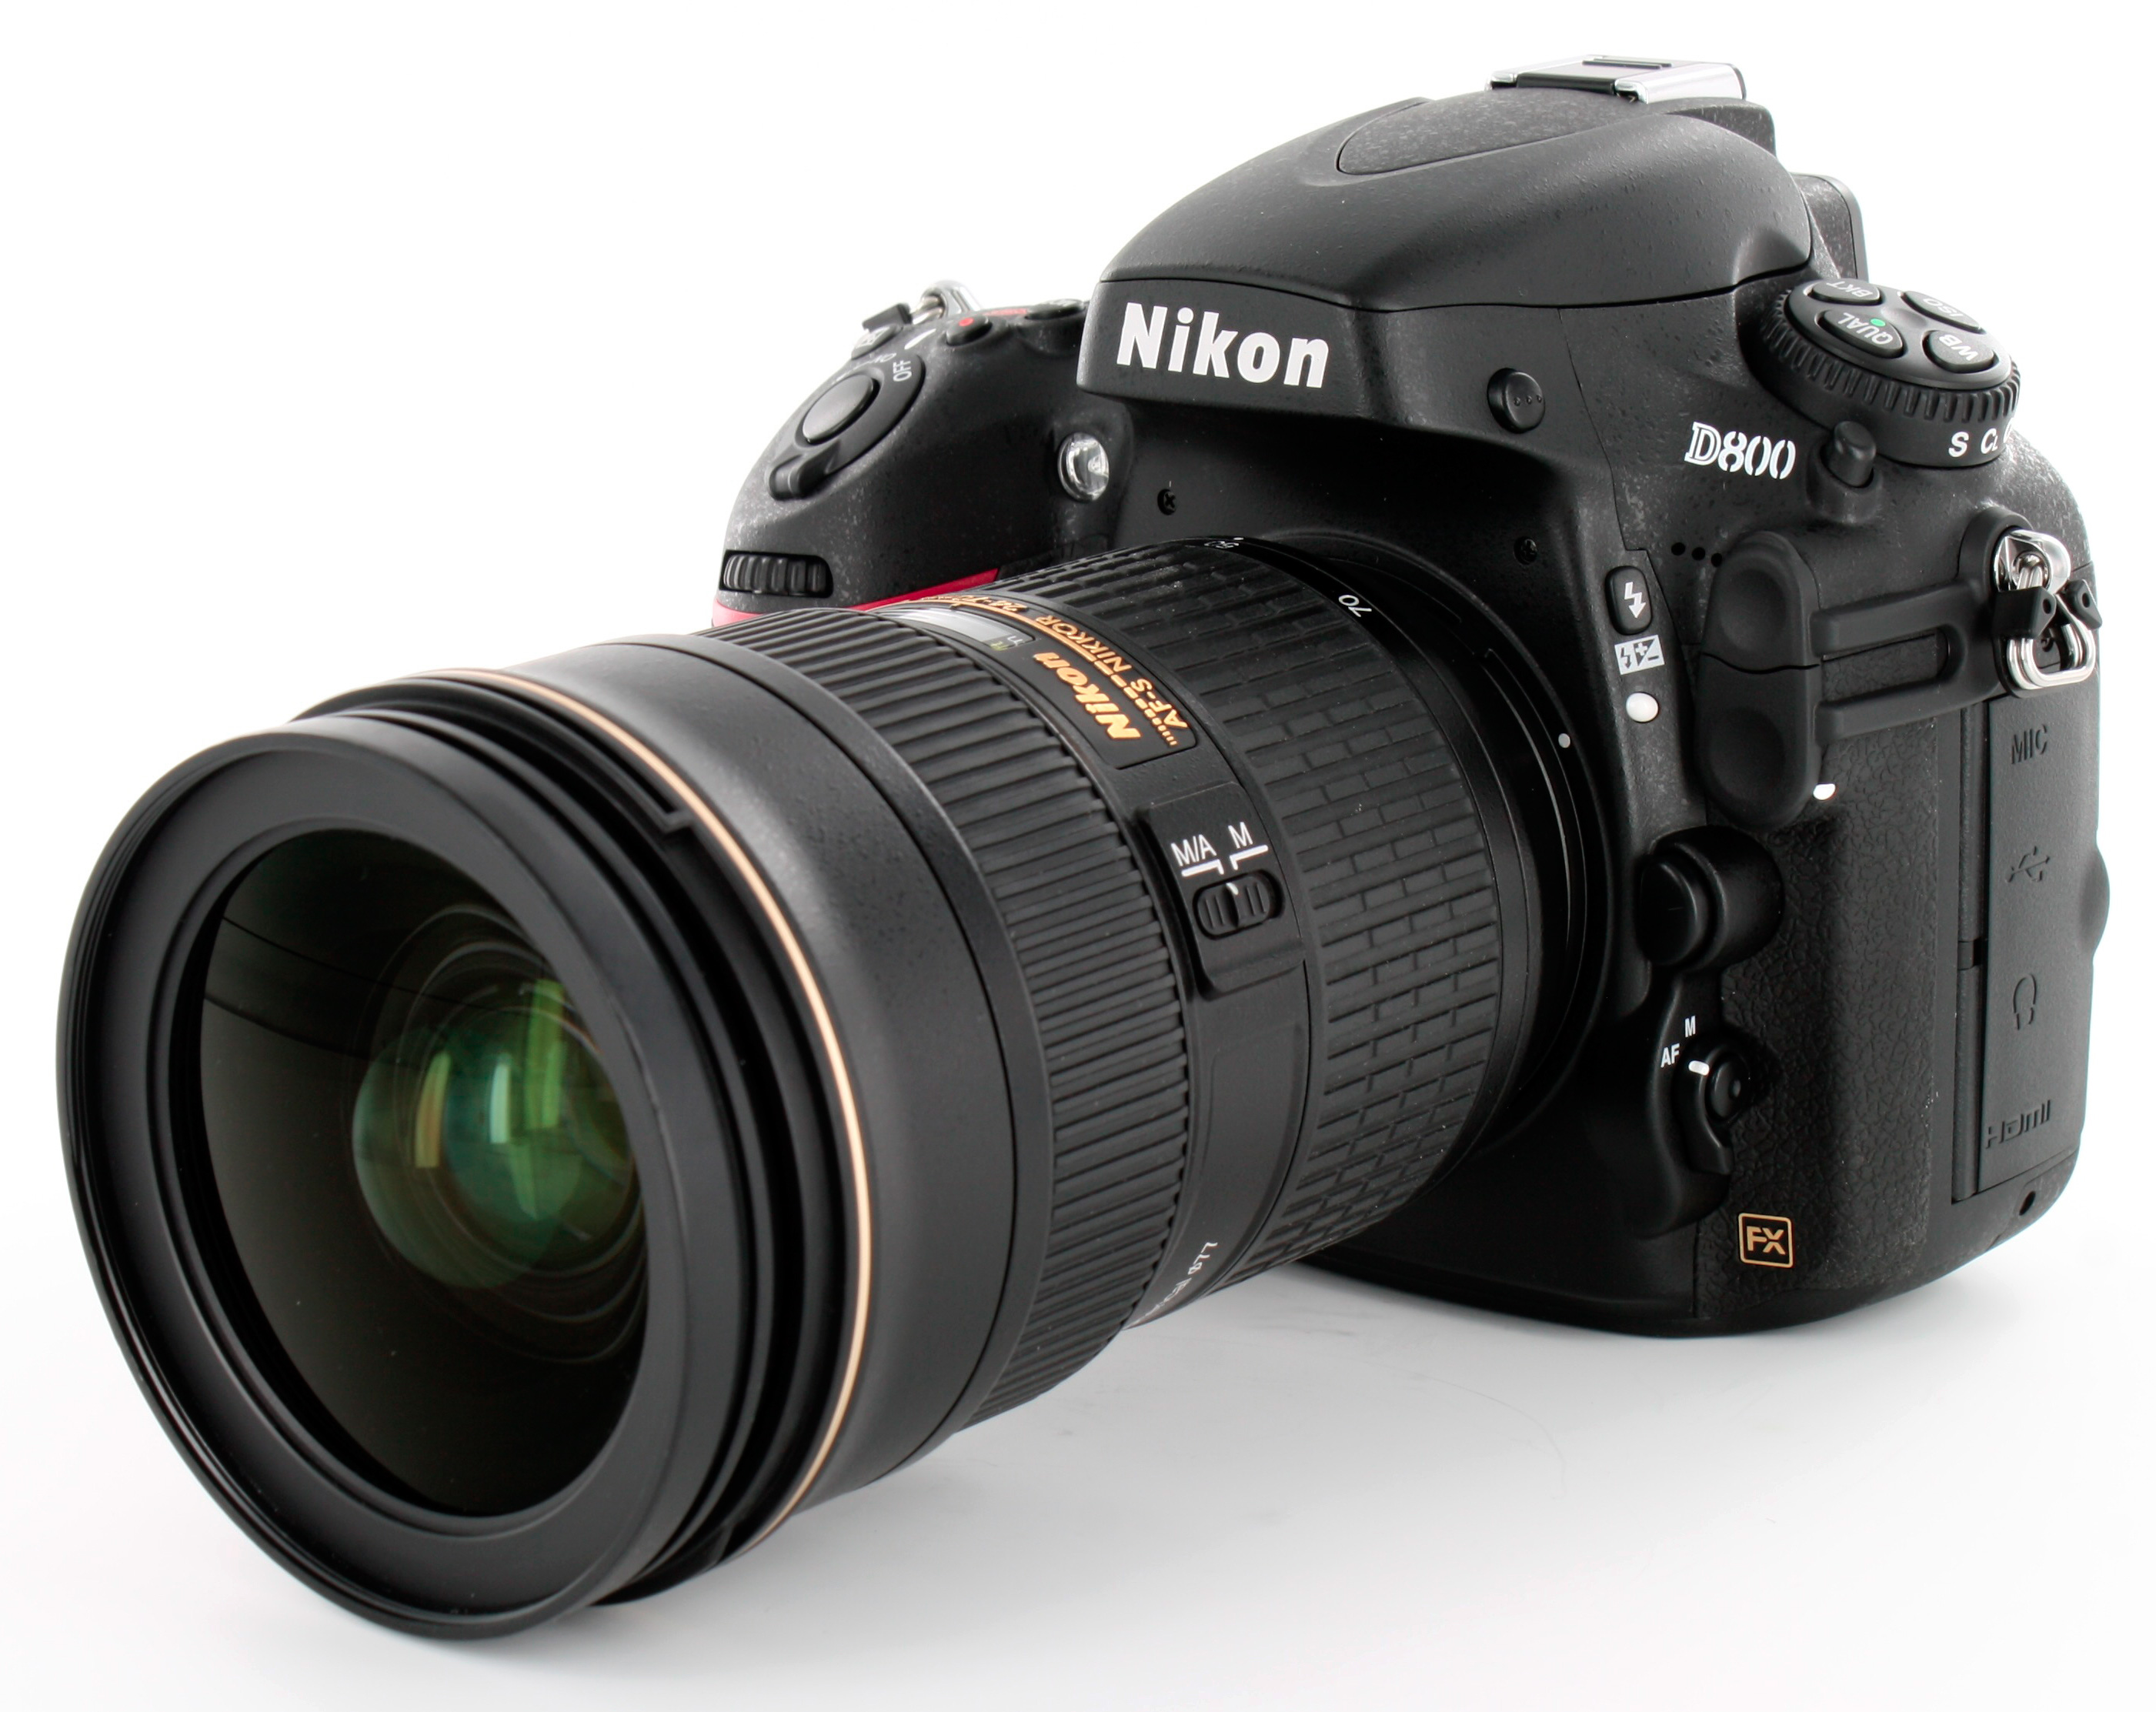 Nikon D800 Digital Camera